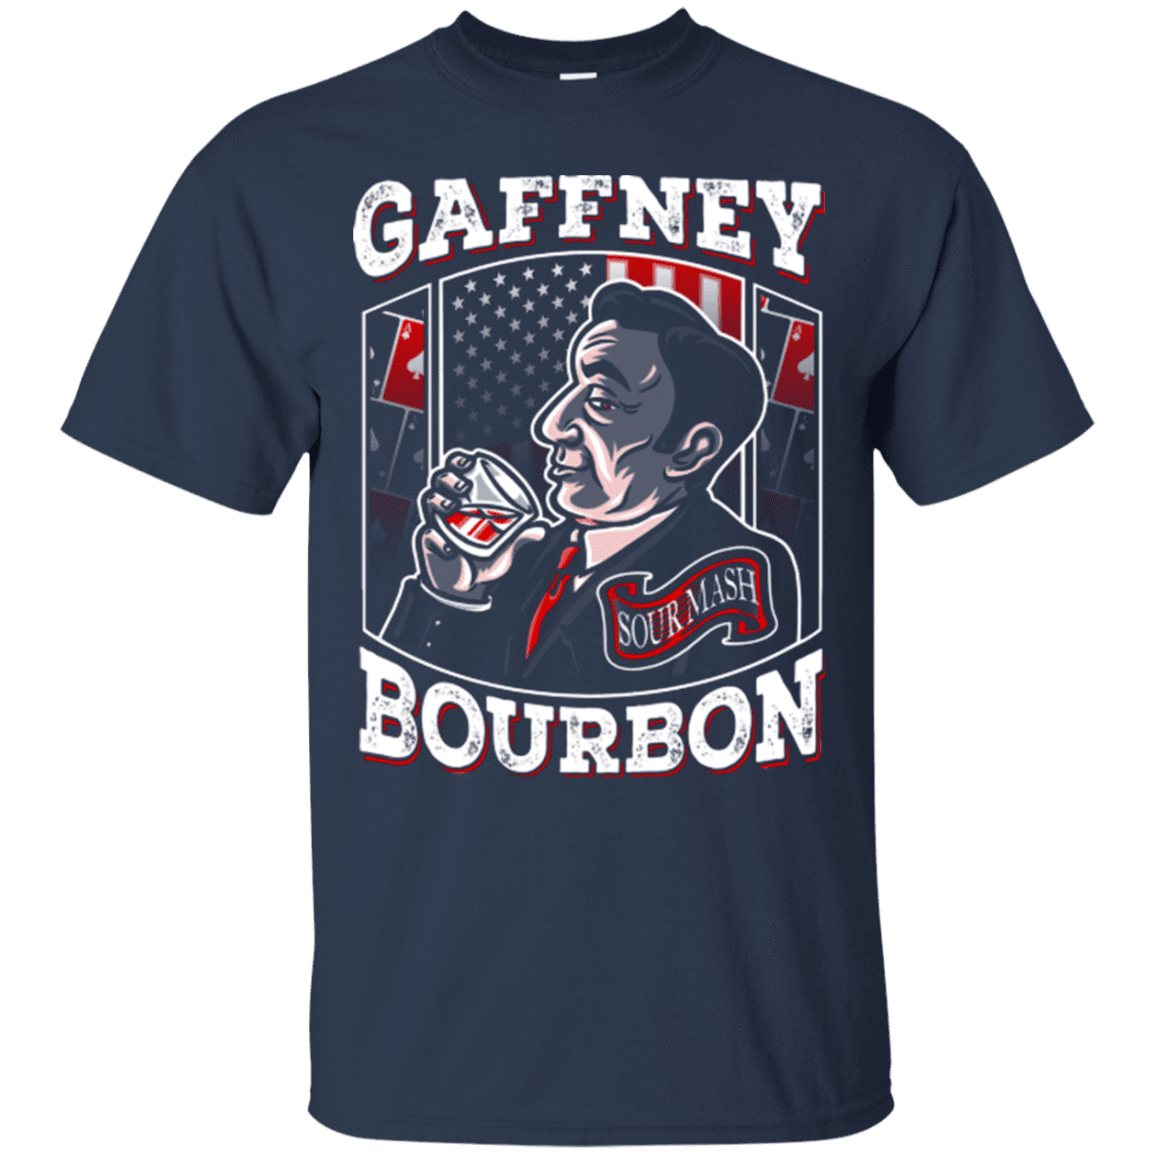 T-Shirts Navy / Small Gaffney Bourbon T-Shirt